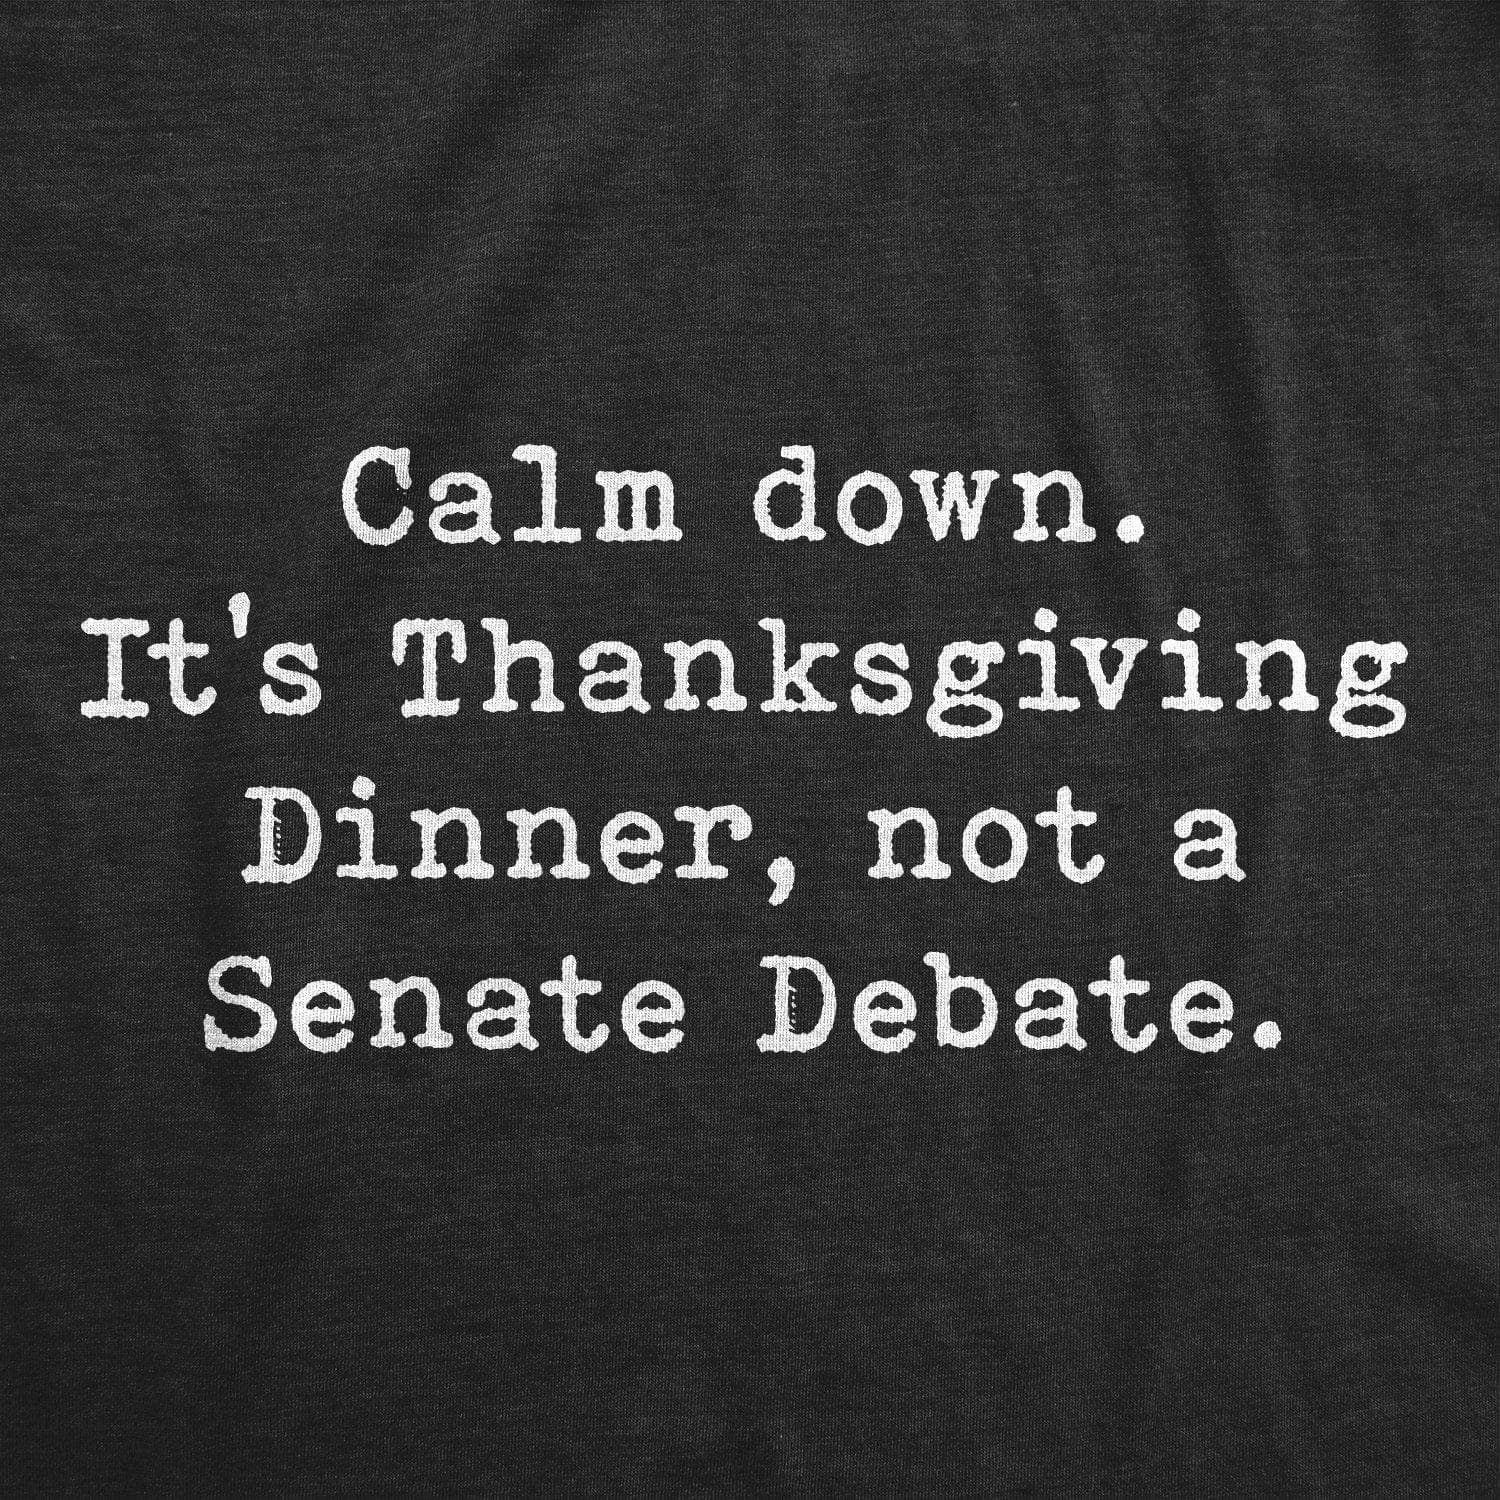 Calm Down It's Thanksgiving Dinner Men's Tshirt - Crazy Dog T-Shirts